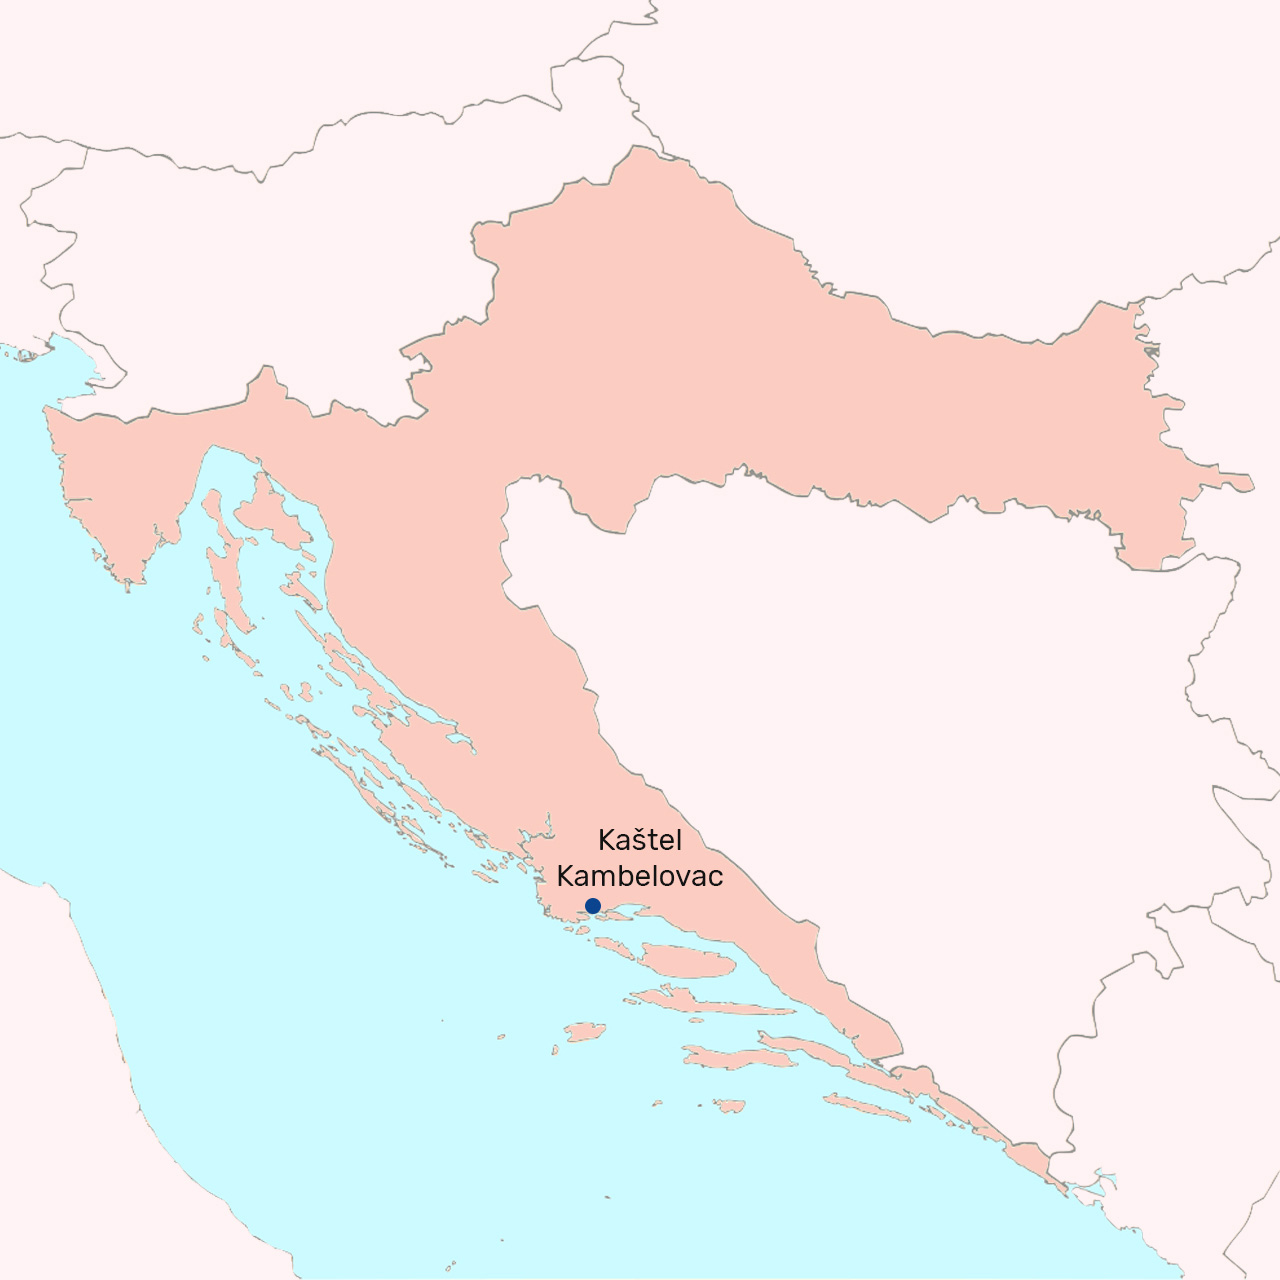 Karta Republike Hrvatske s označenim Kaštel Kambelovcem. 